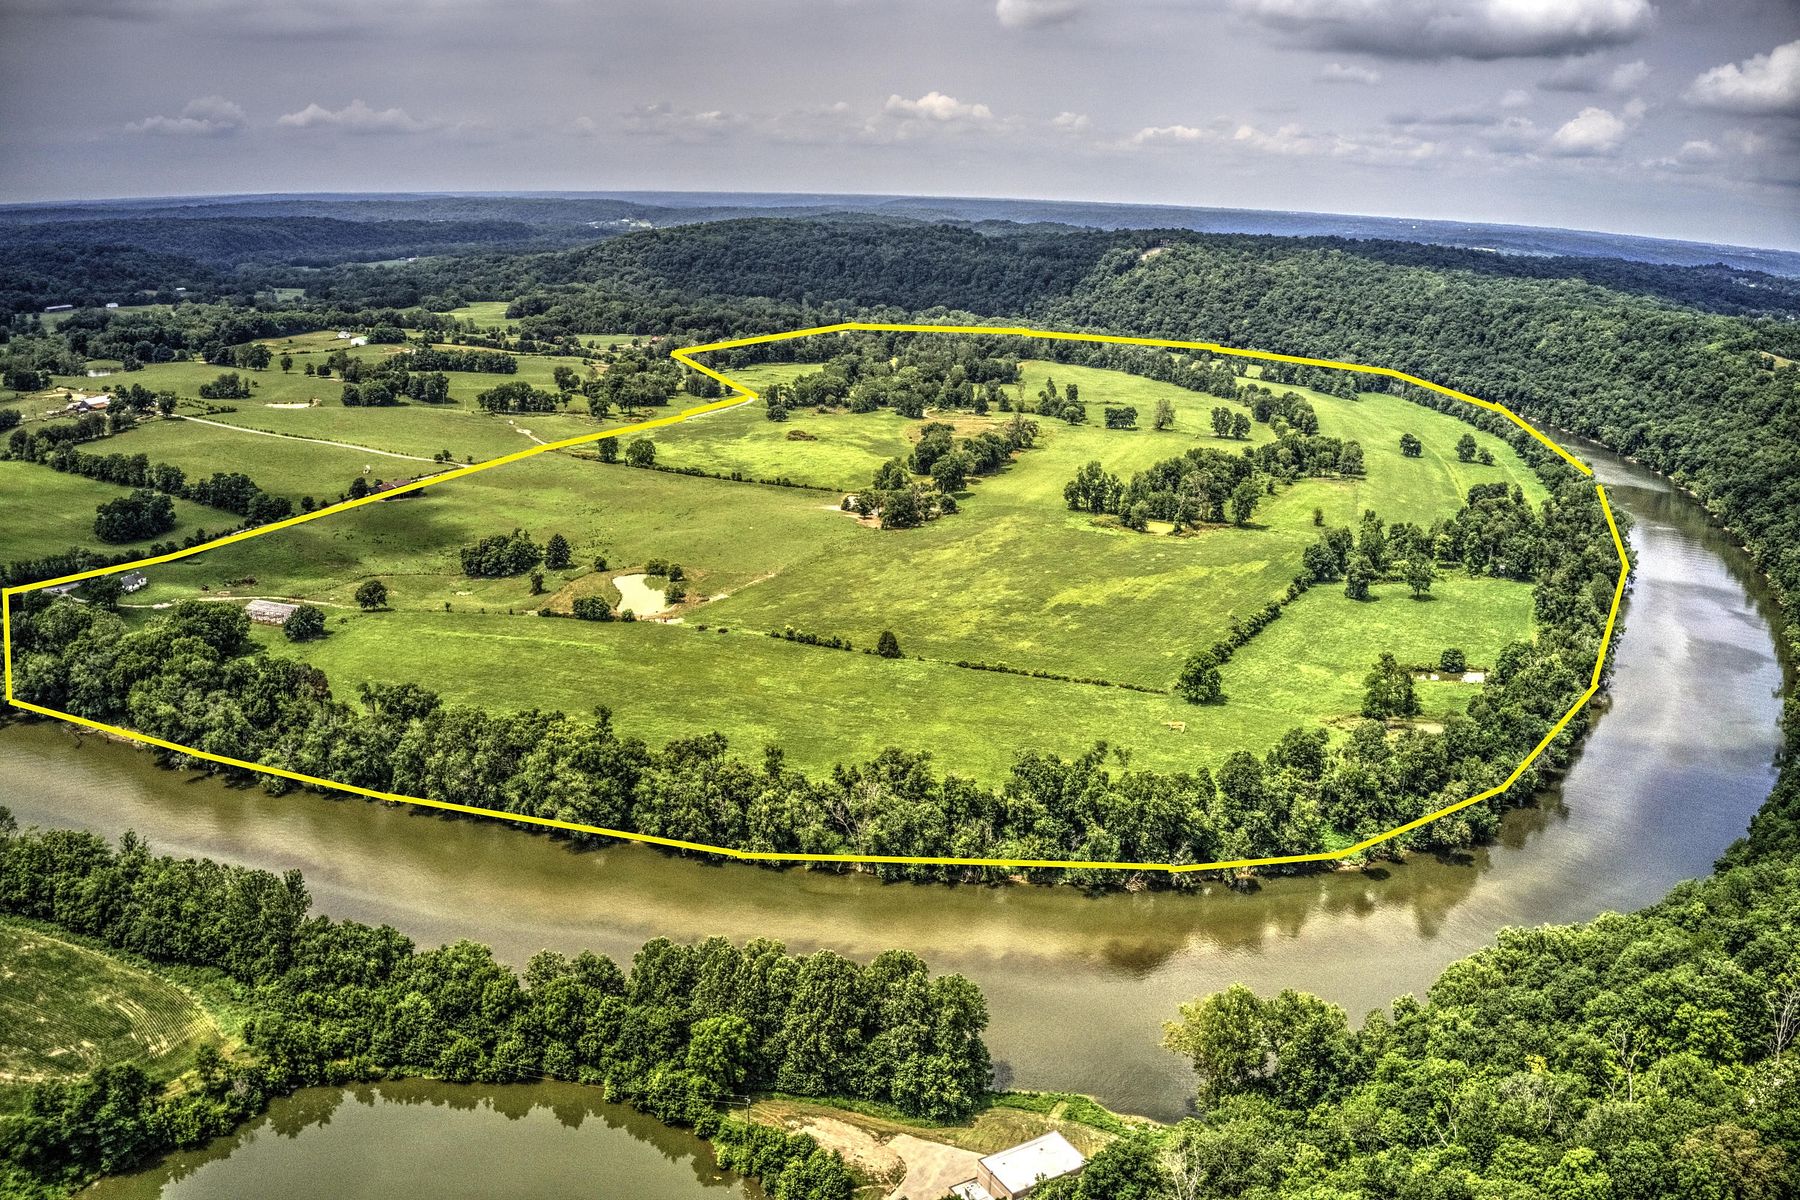 209 Acres of Recreational Land & Farm Frankfort, Kentucky, KY